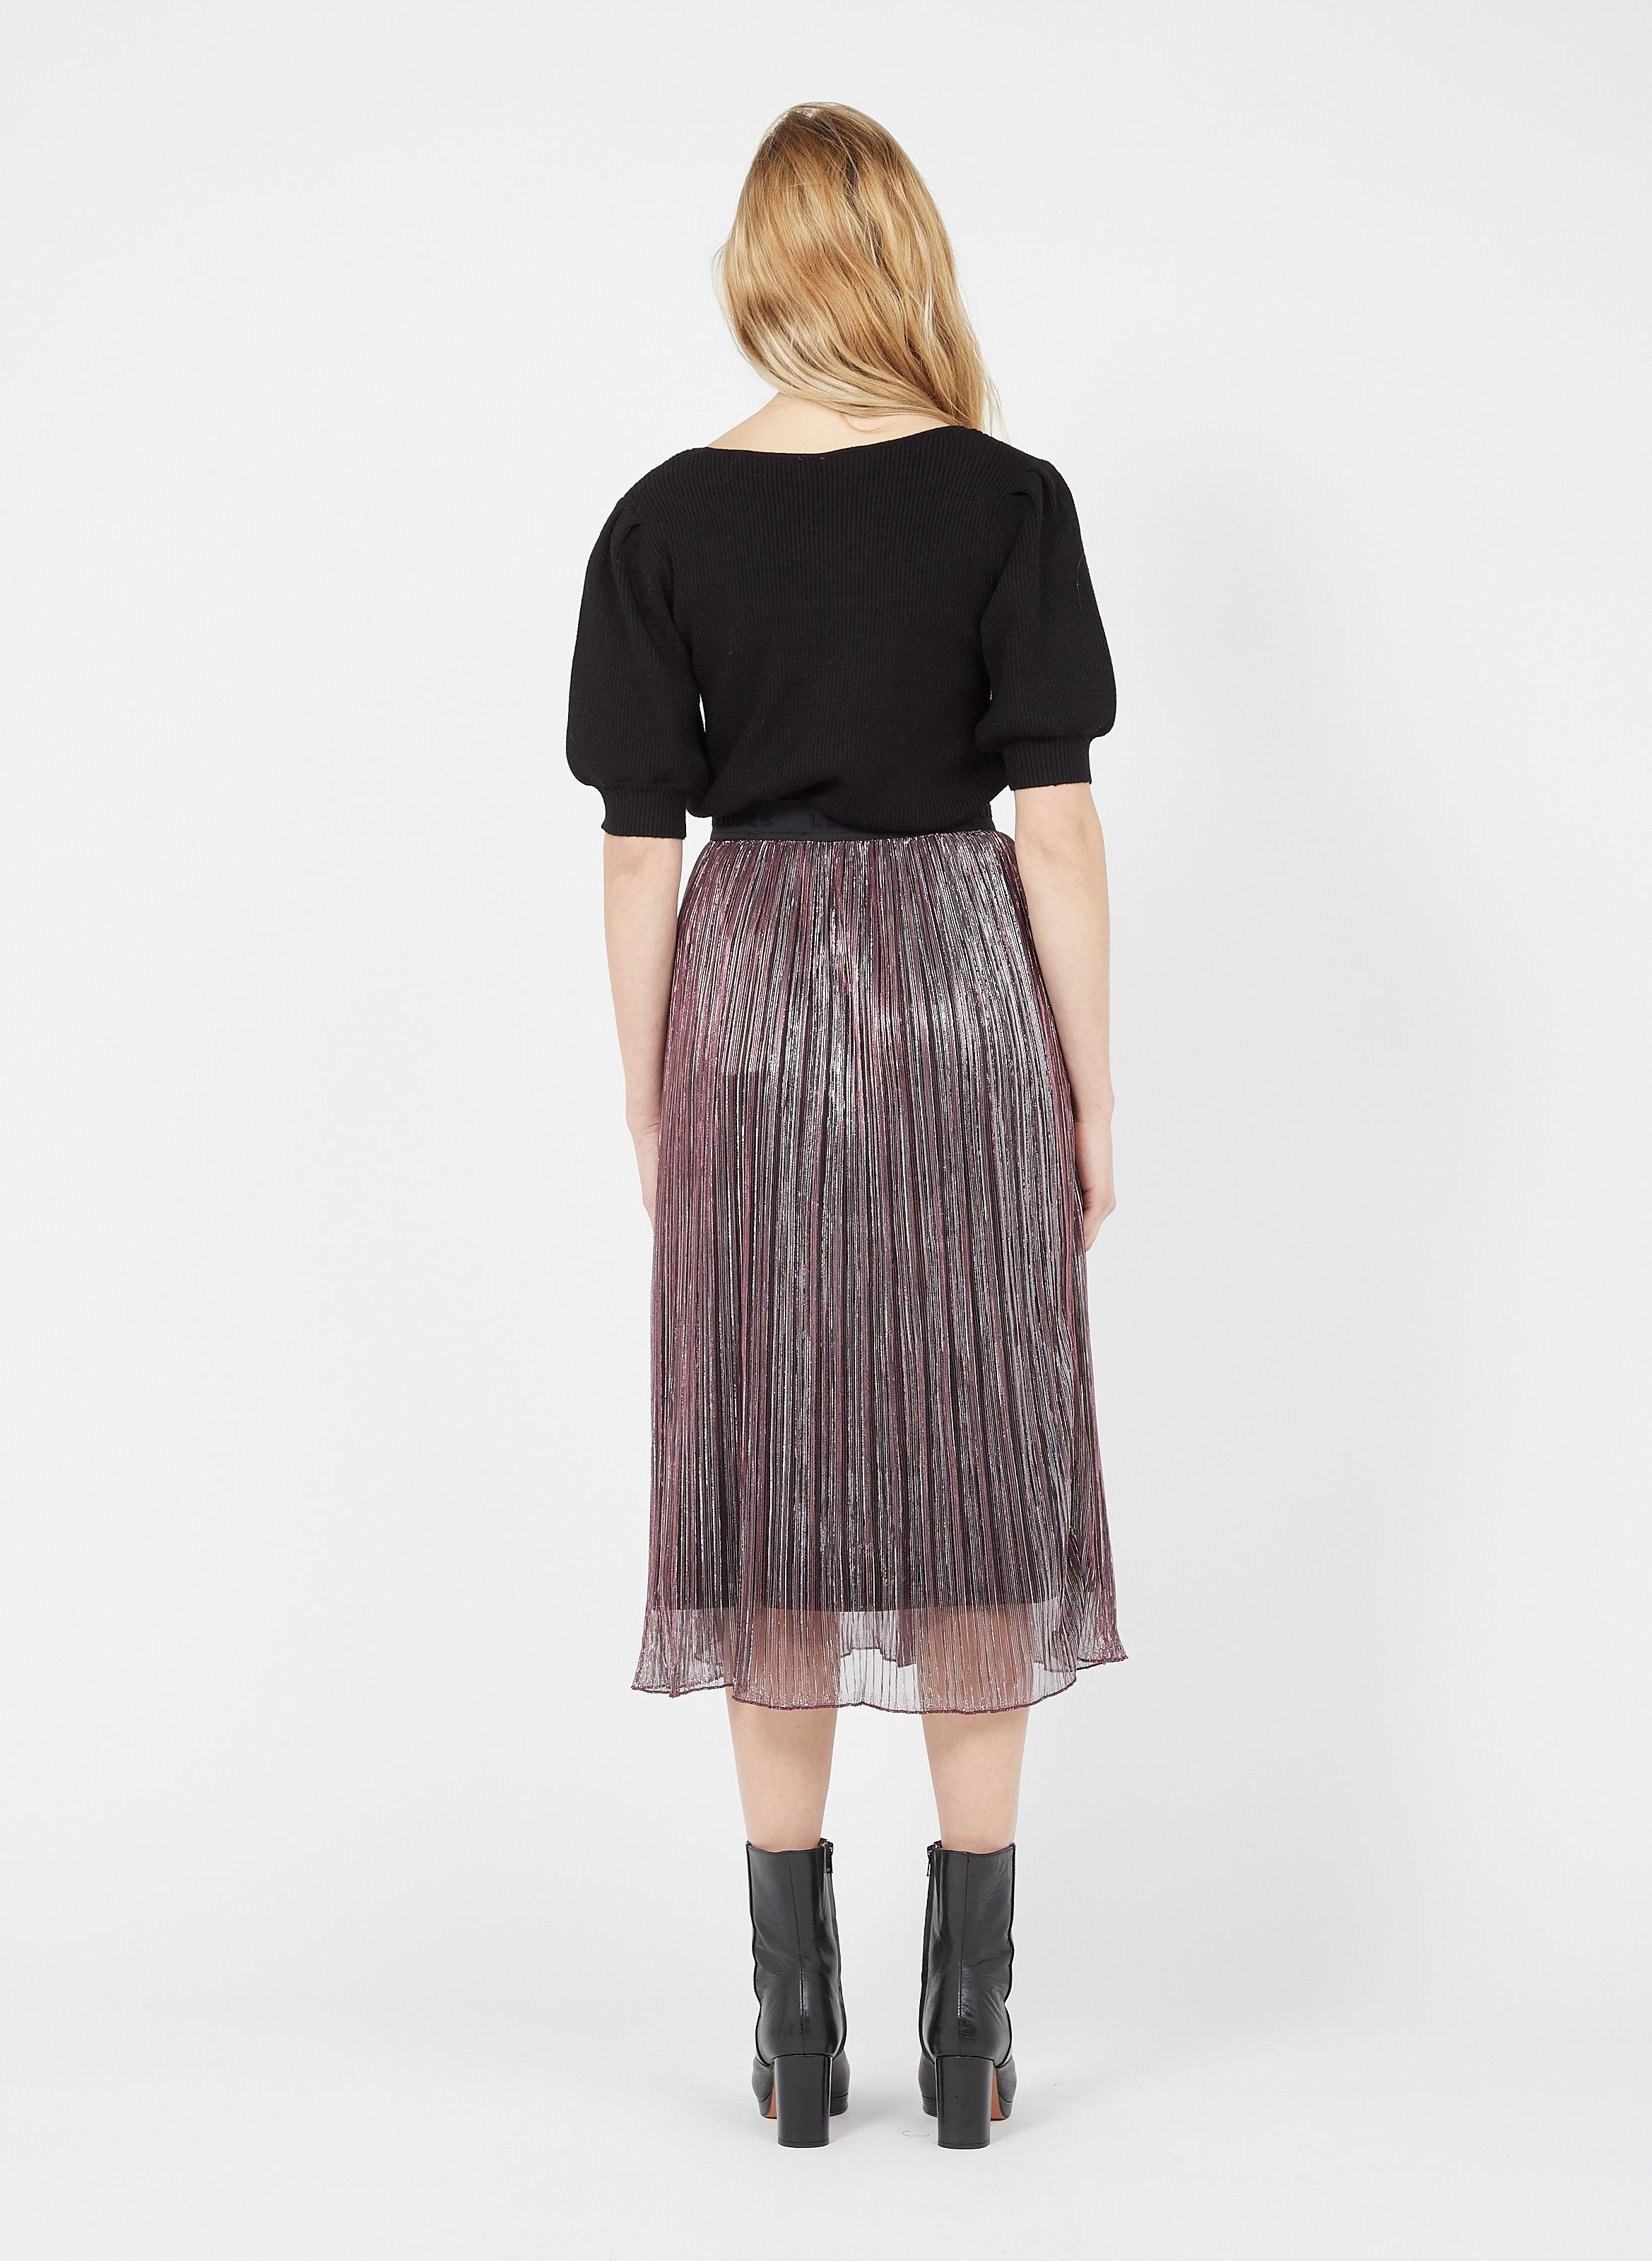 metallic midi skirt uk